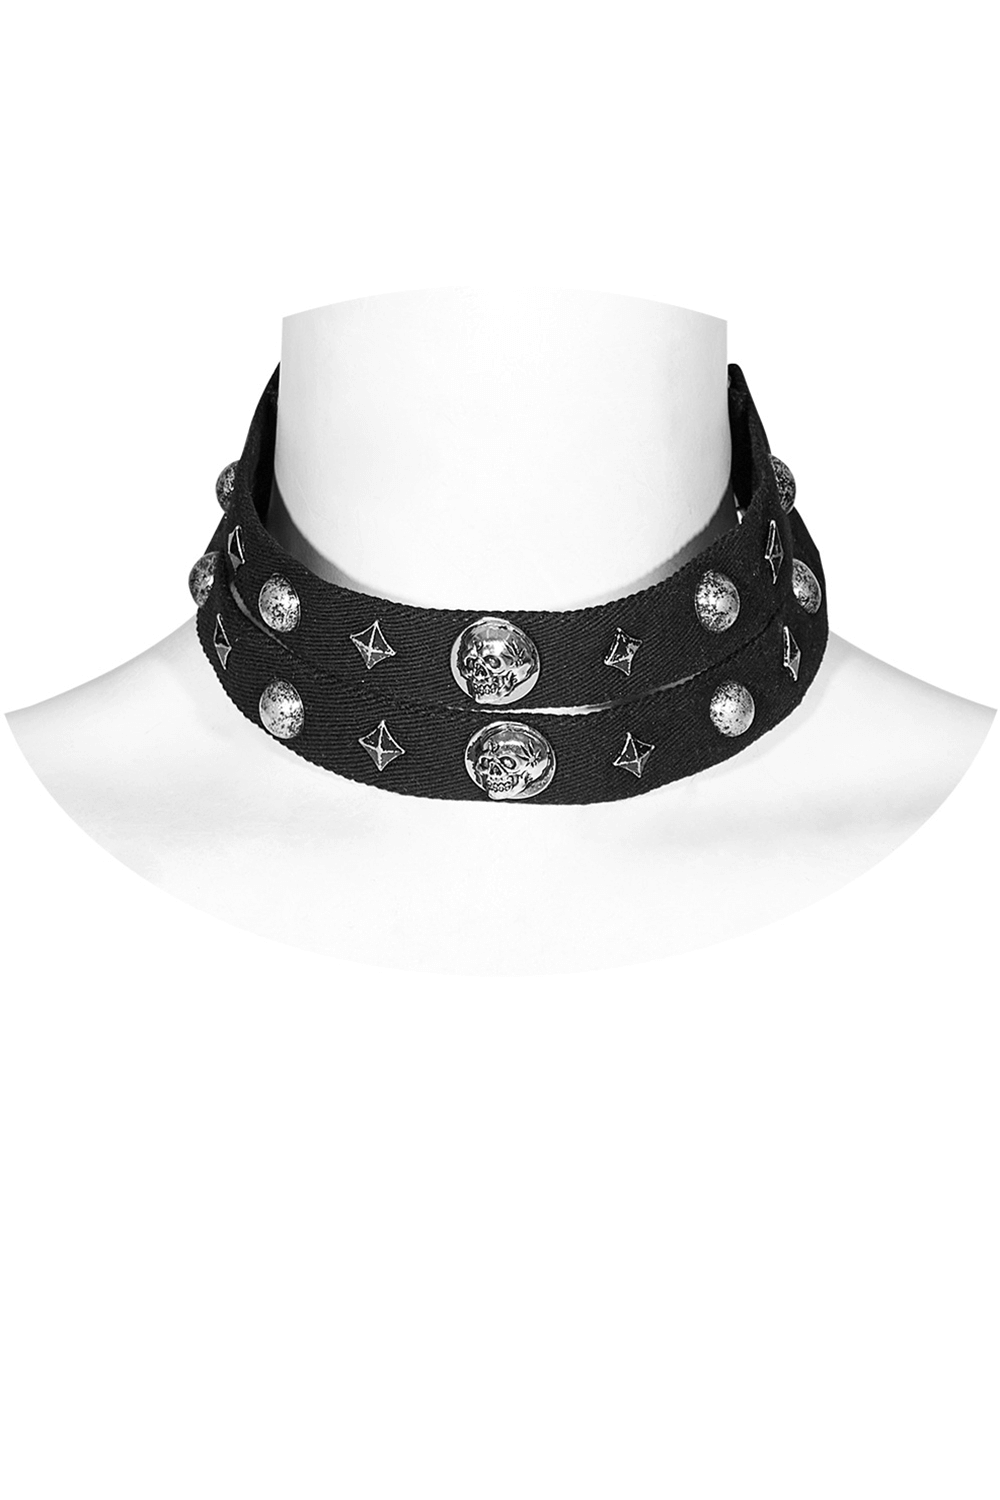 Gothic Female Double Neckwear with Skulls and Stars